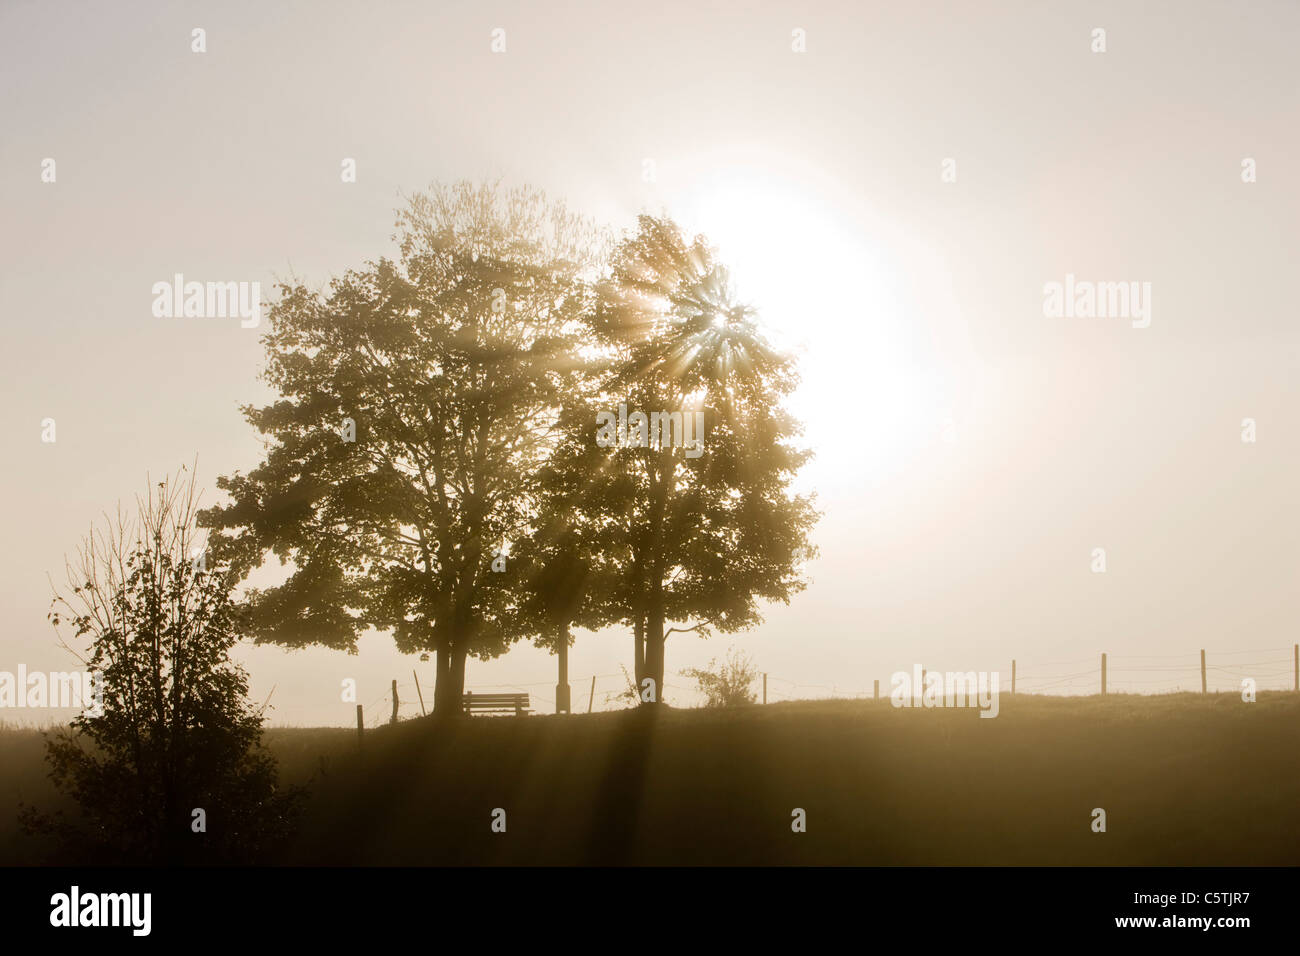 Germany, Bavaria, Trees with fog and back light Stock Photo